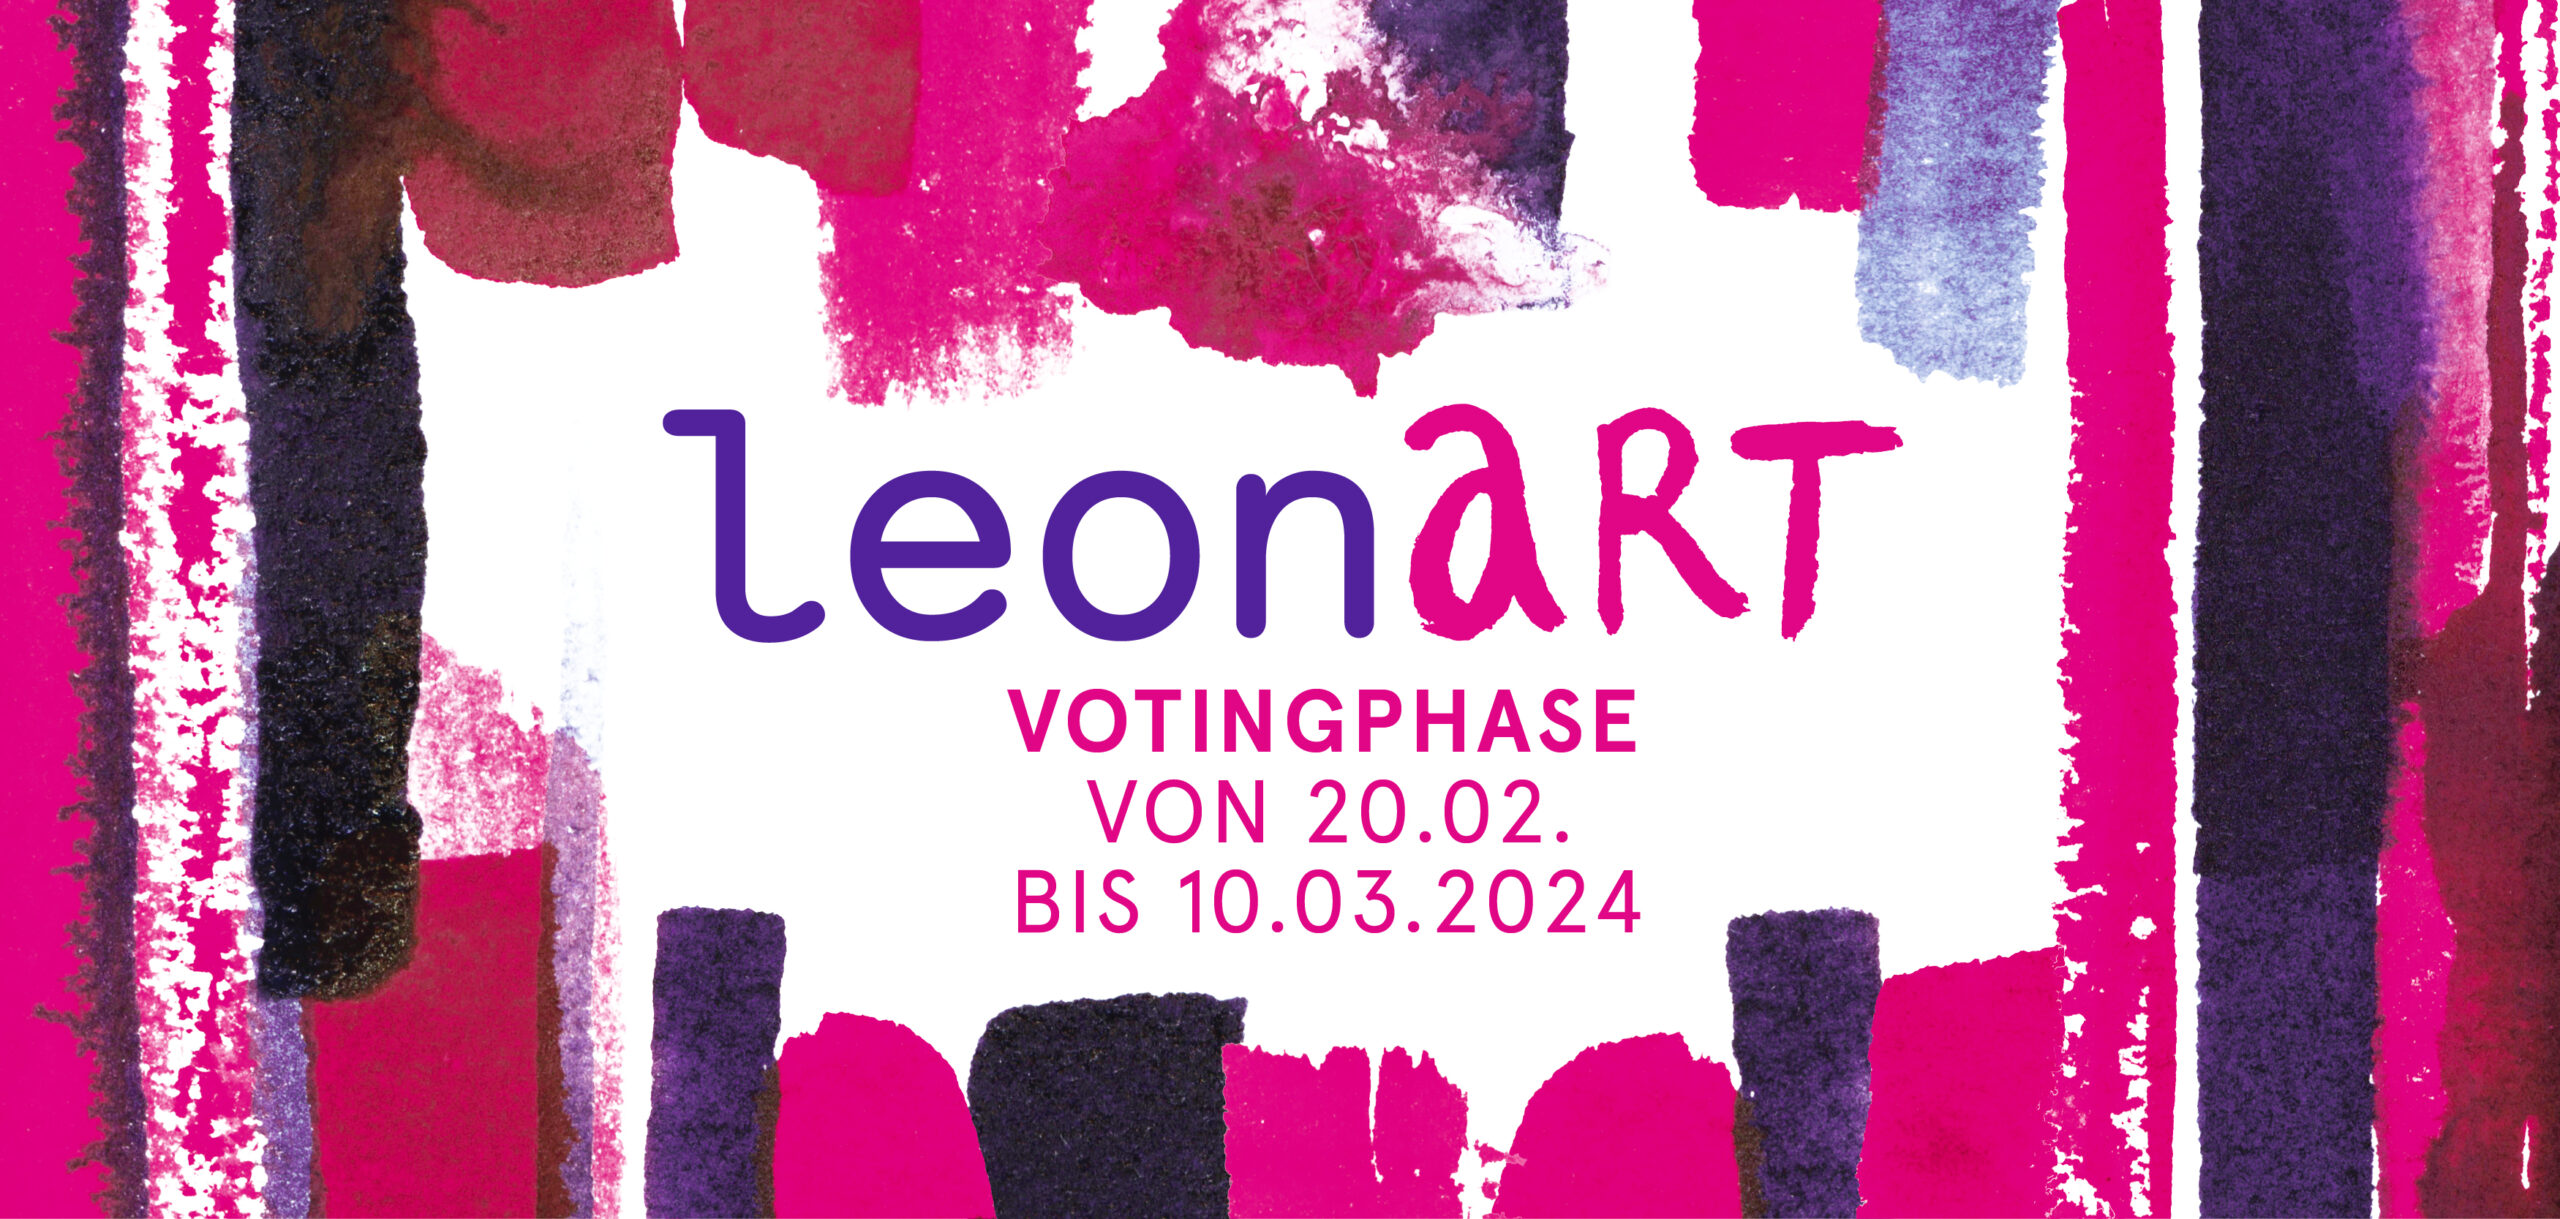 Hauptsujet Voting leonART 2024 | Fotocredit Zunder & Katja Seifert